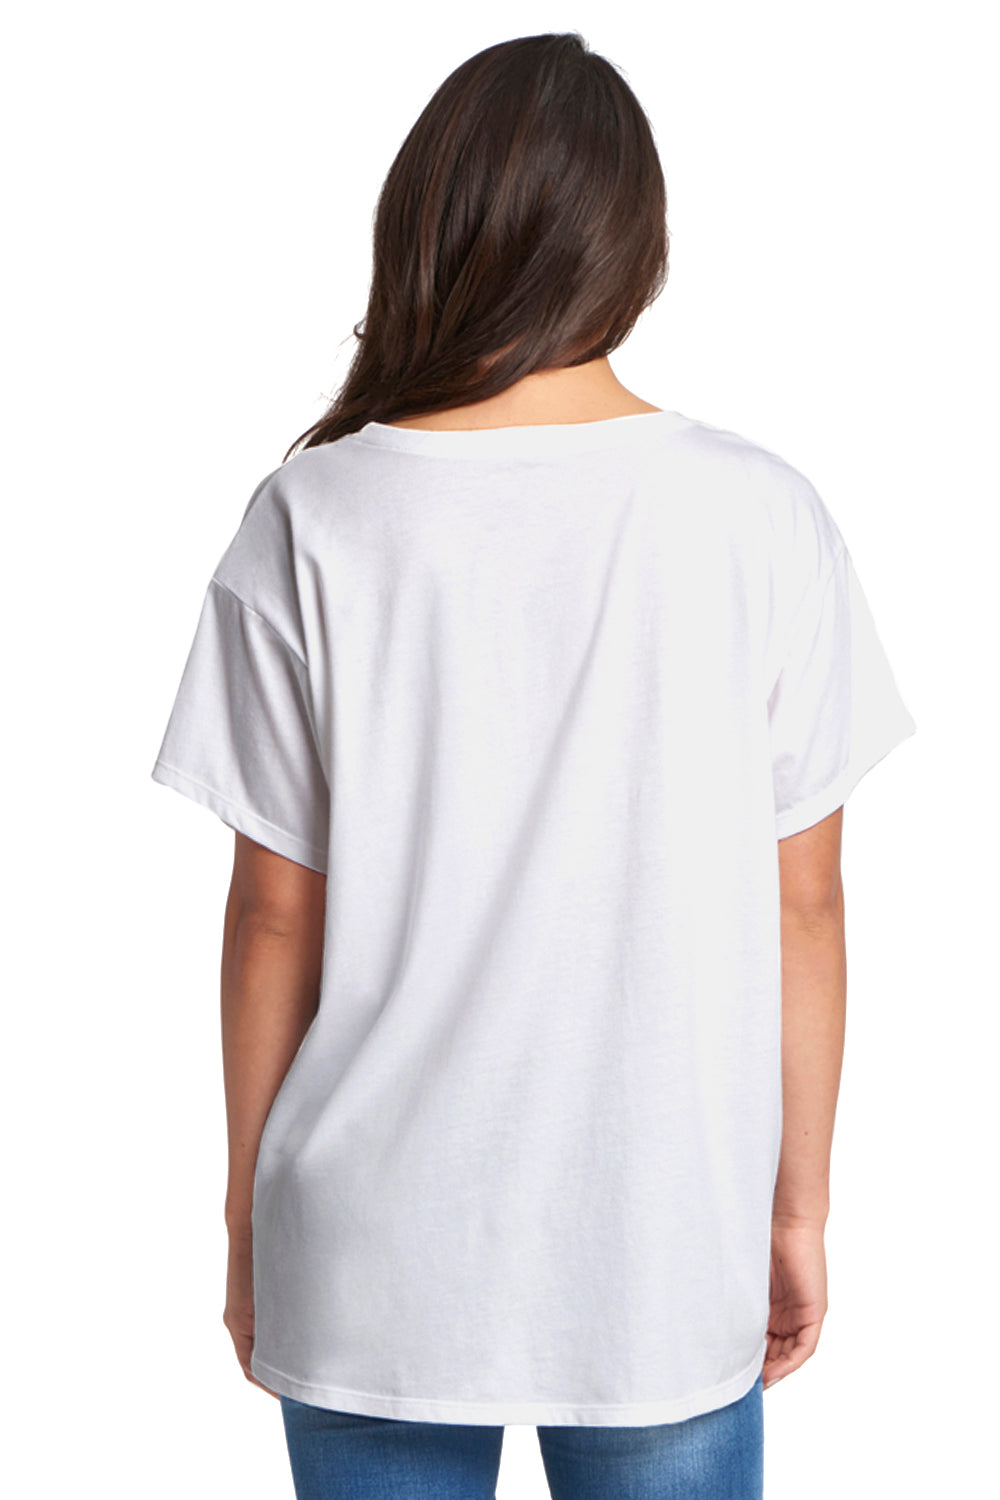 Next Level N1530 Womens Ideal Flow Short Sleeve Crewneck T-Shirt White Back